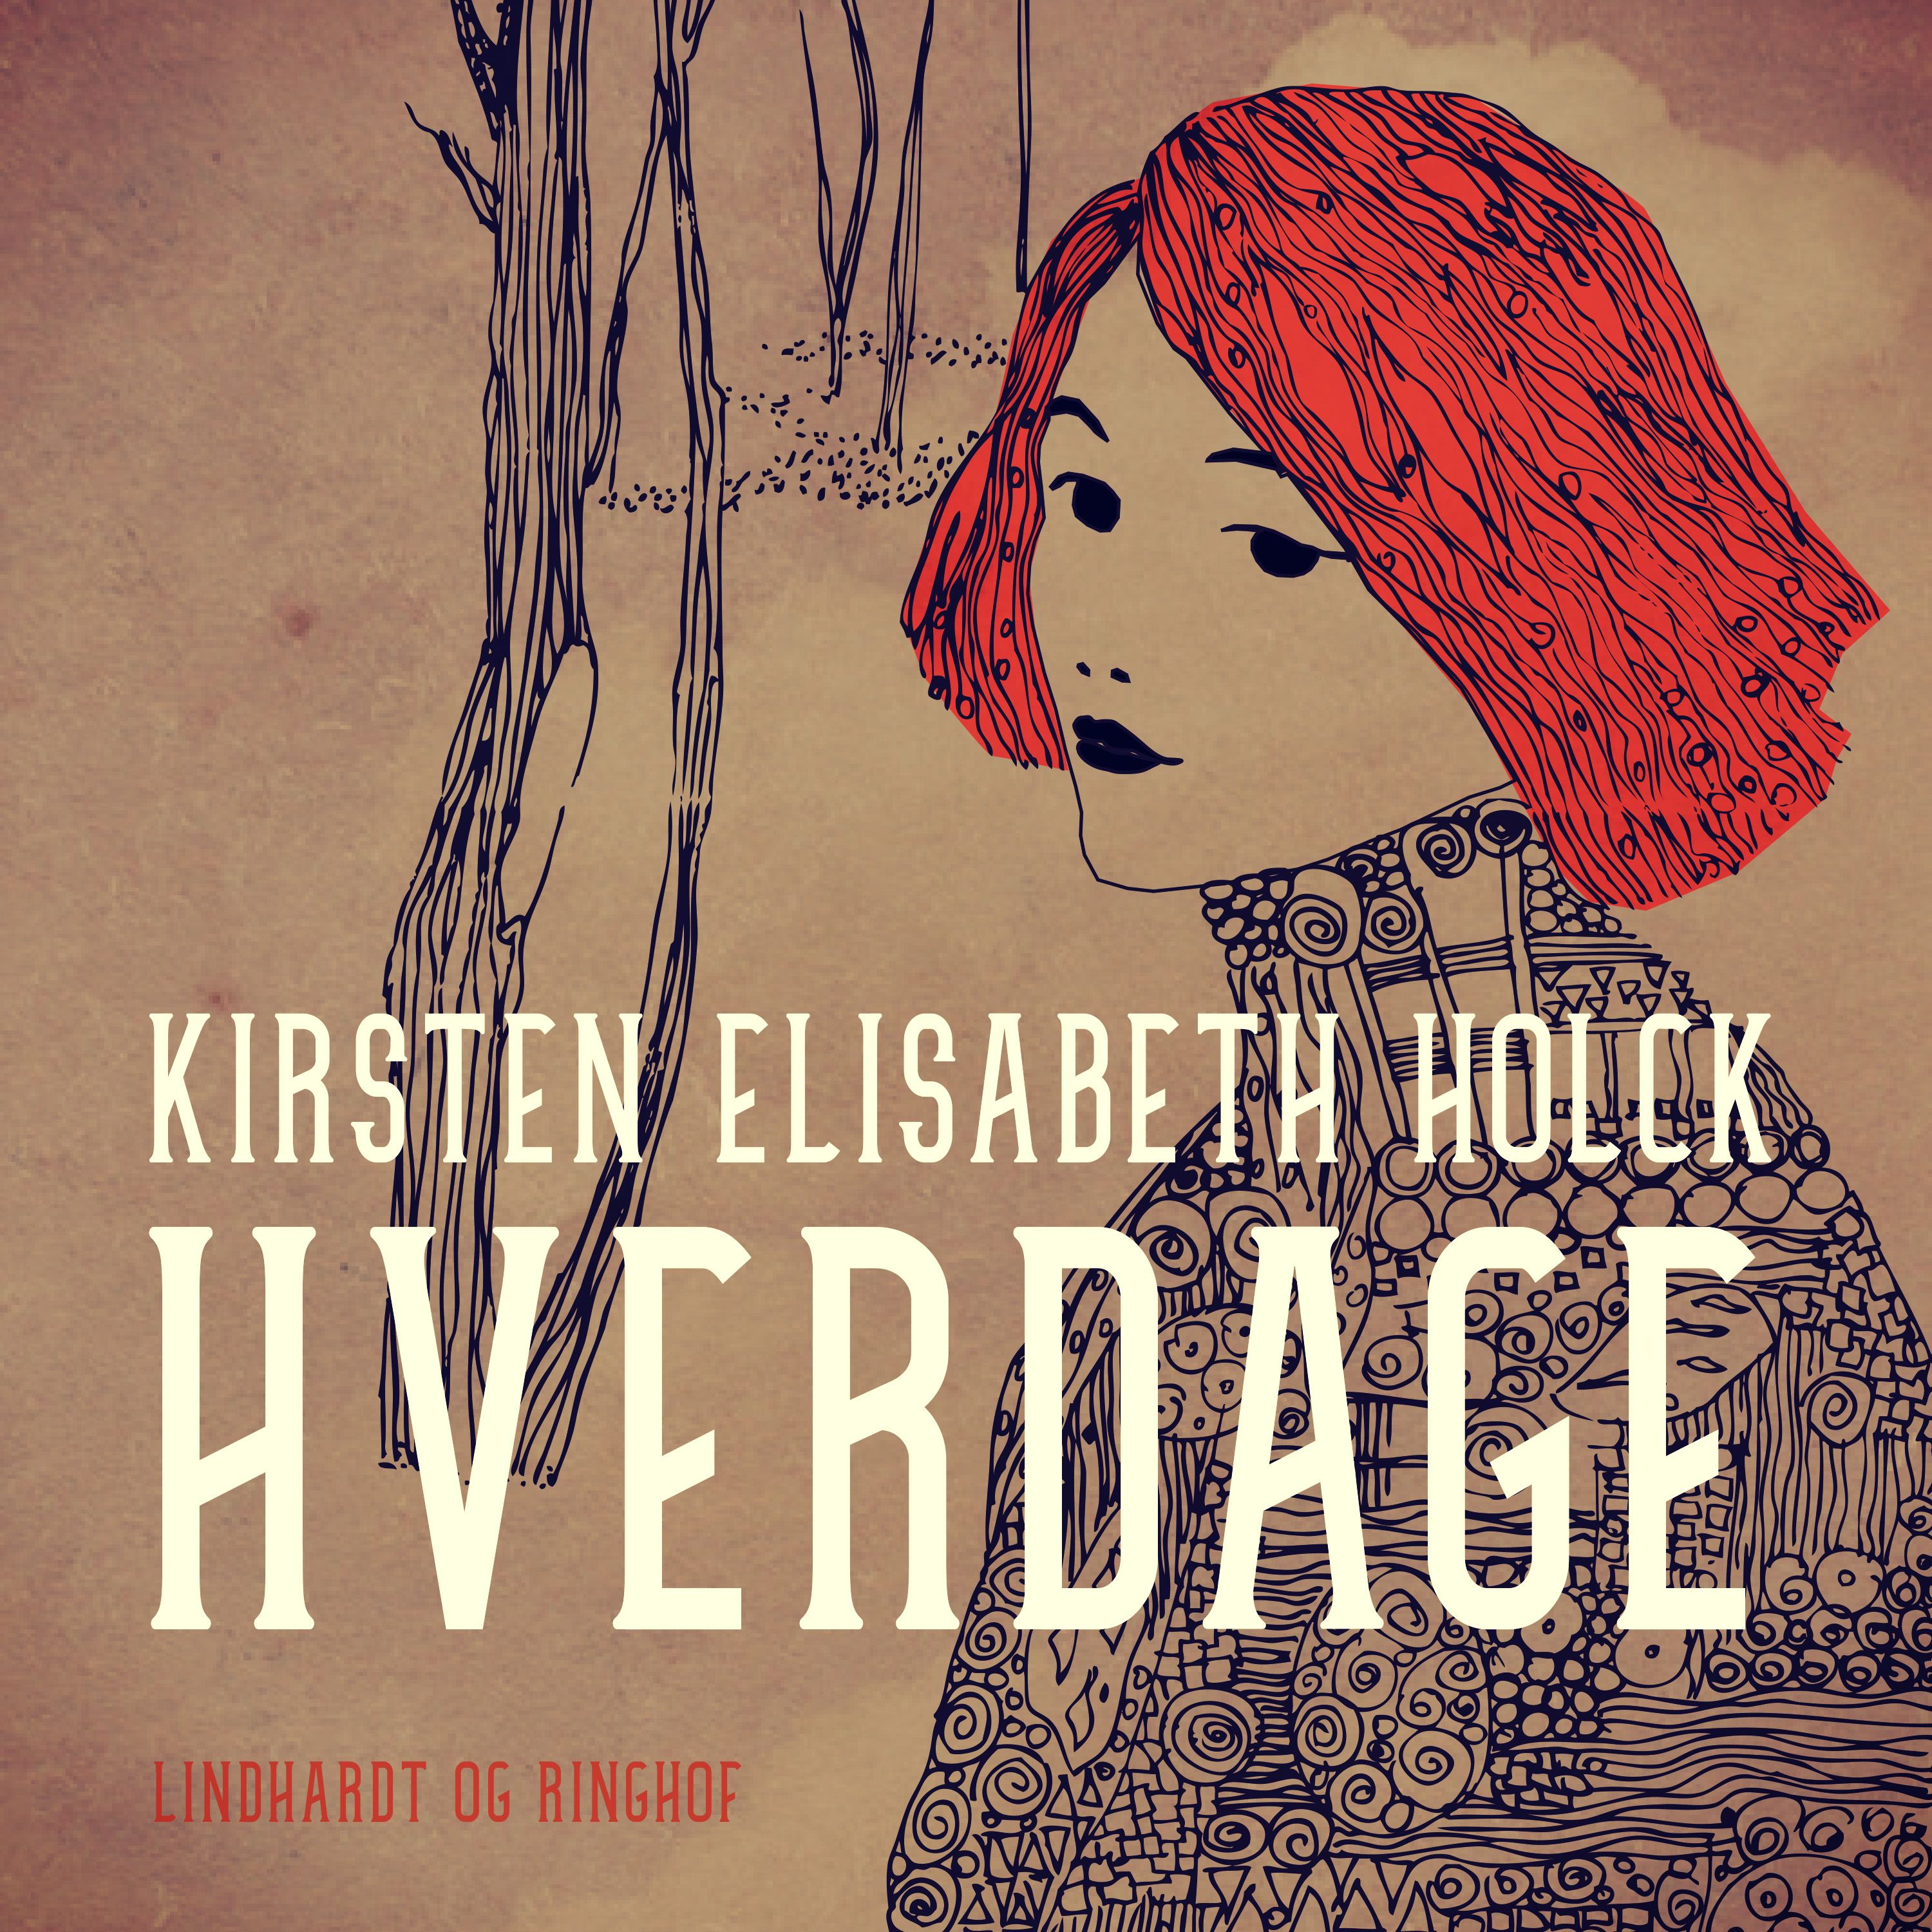 Hverdage, ljudbok av Kirsten Elisabeth Holck